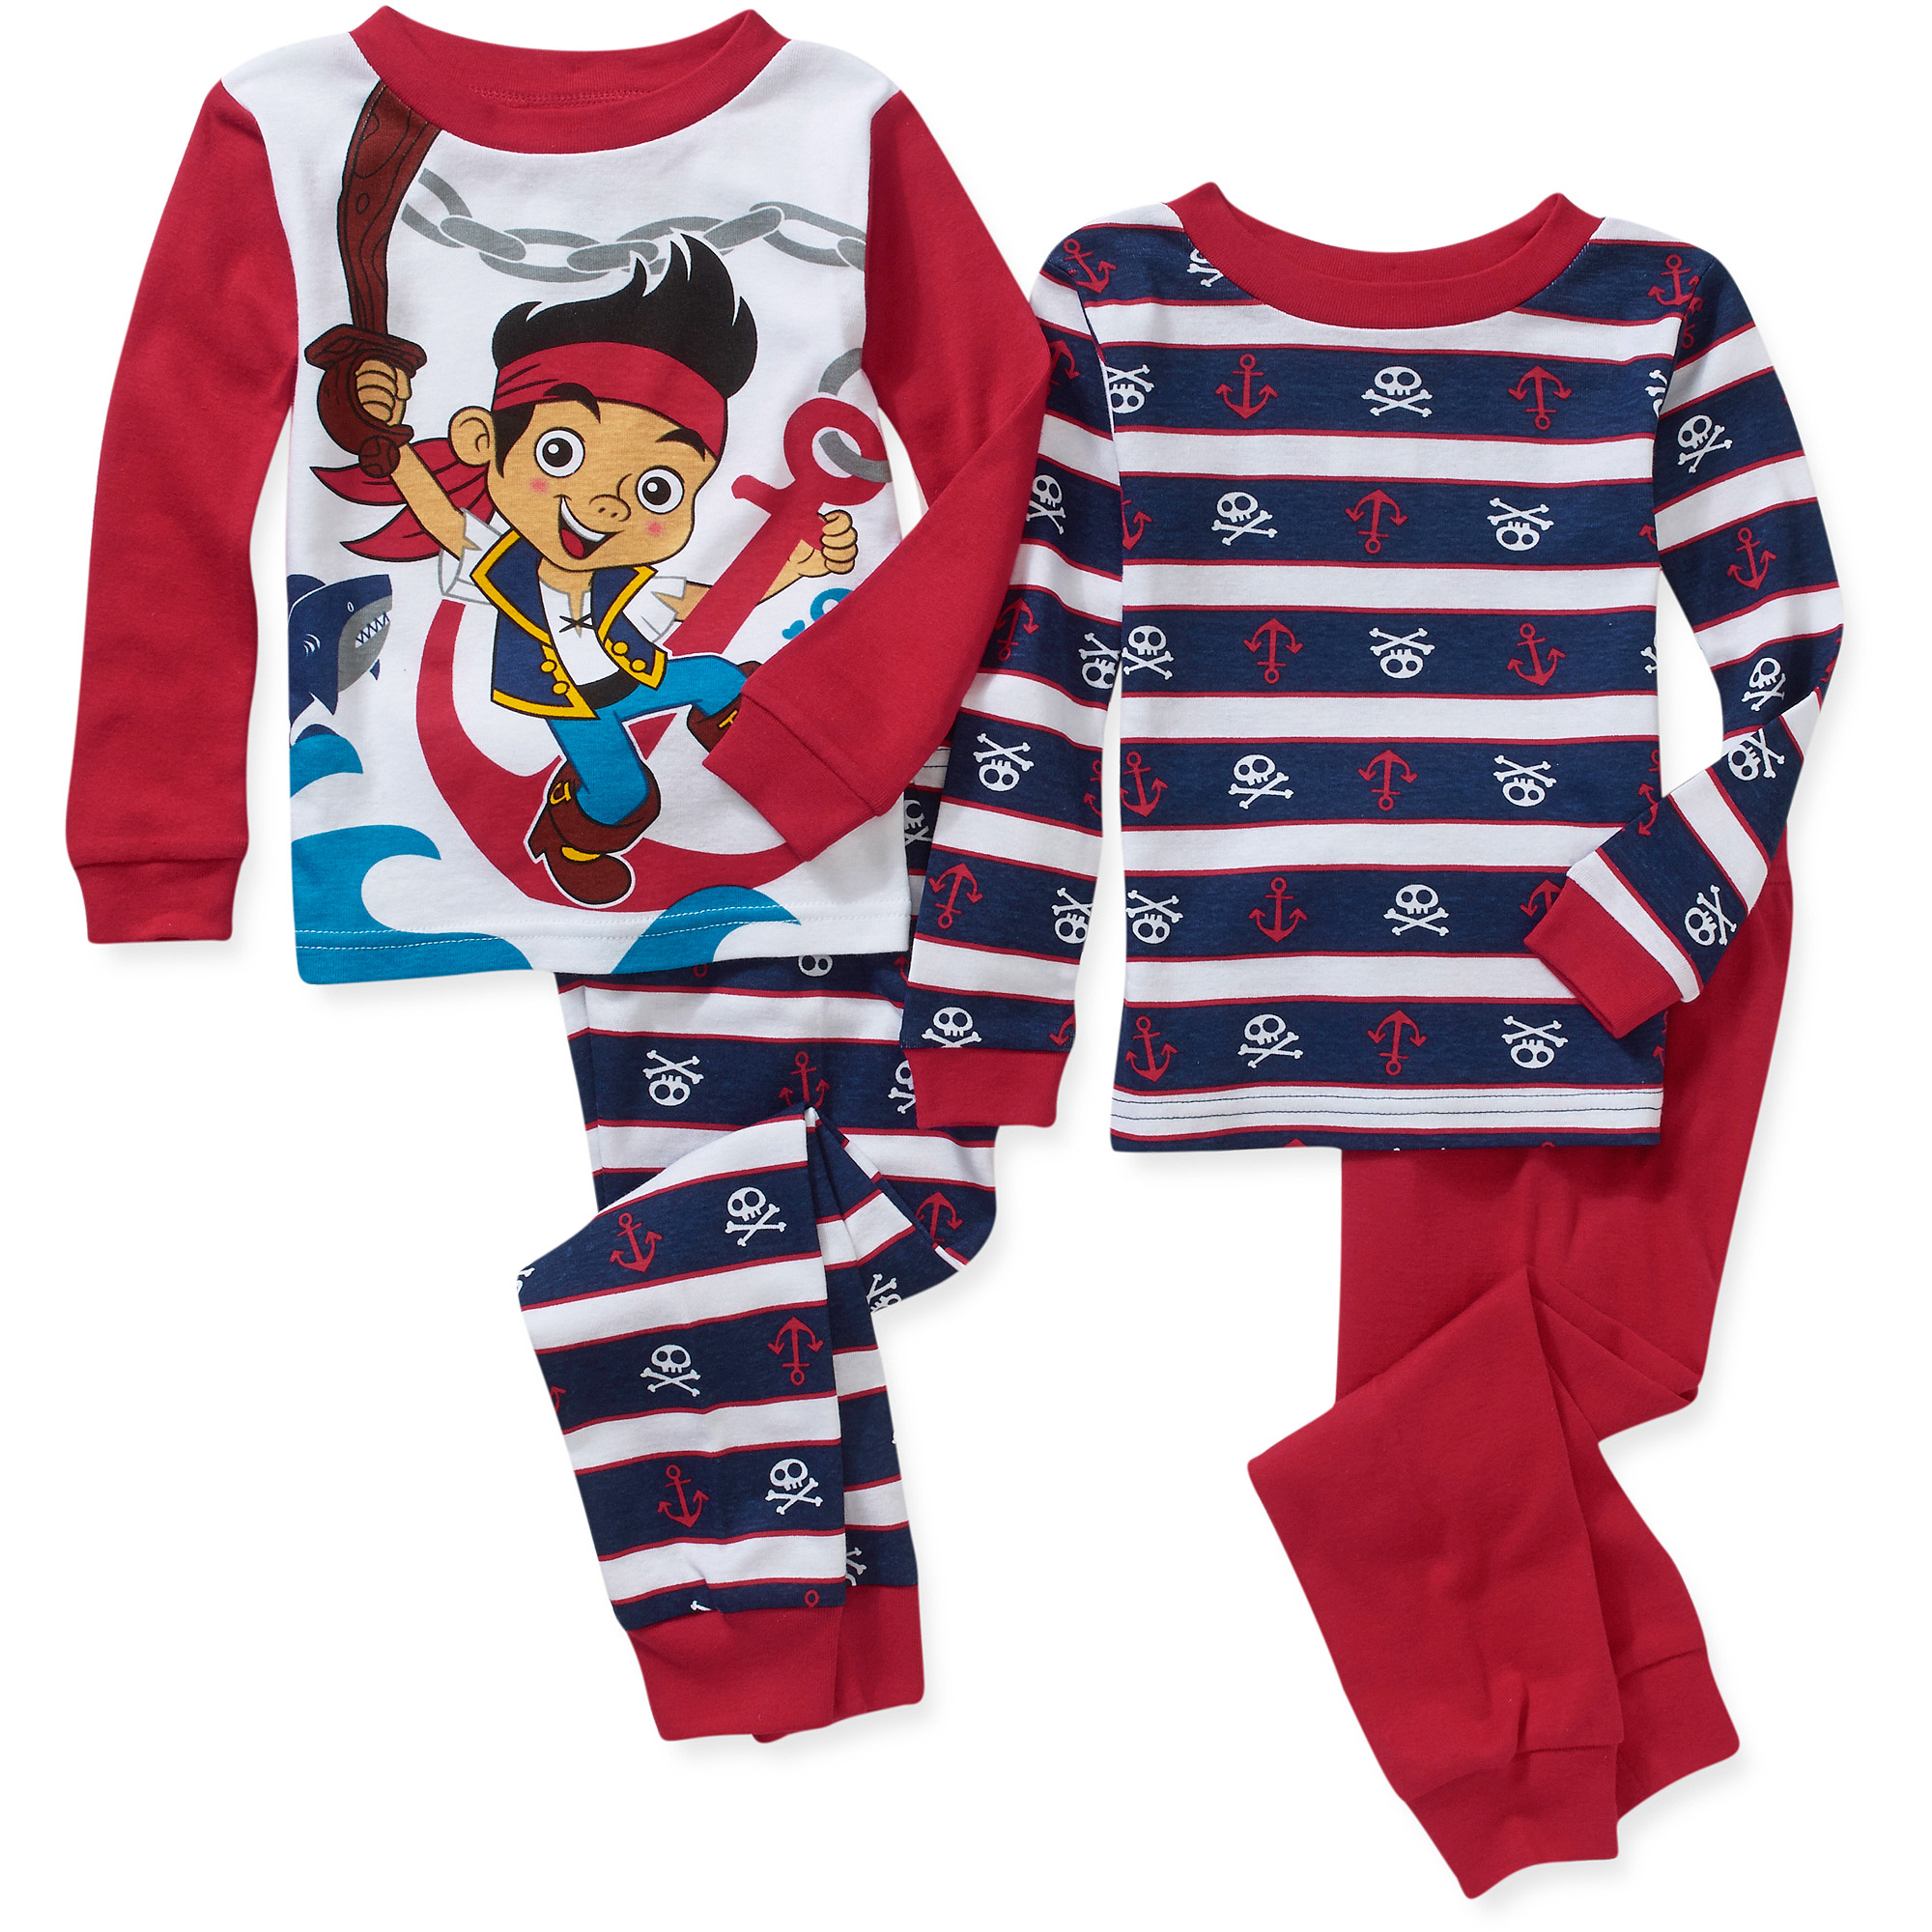 Baby Toddler Boy Jake & the Neverland Pirates Cotton Pajama - image 1 of 1